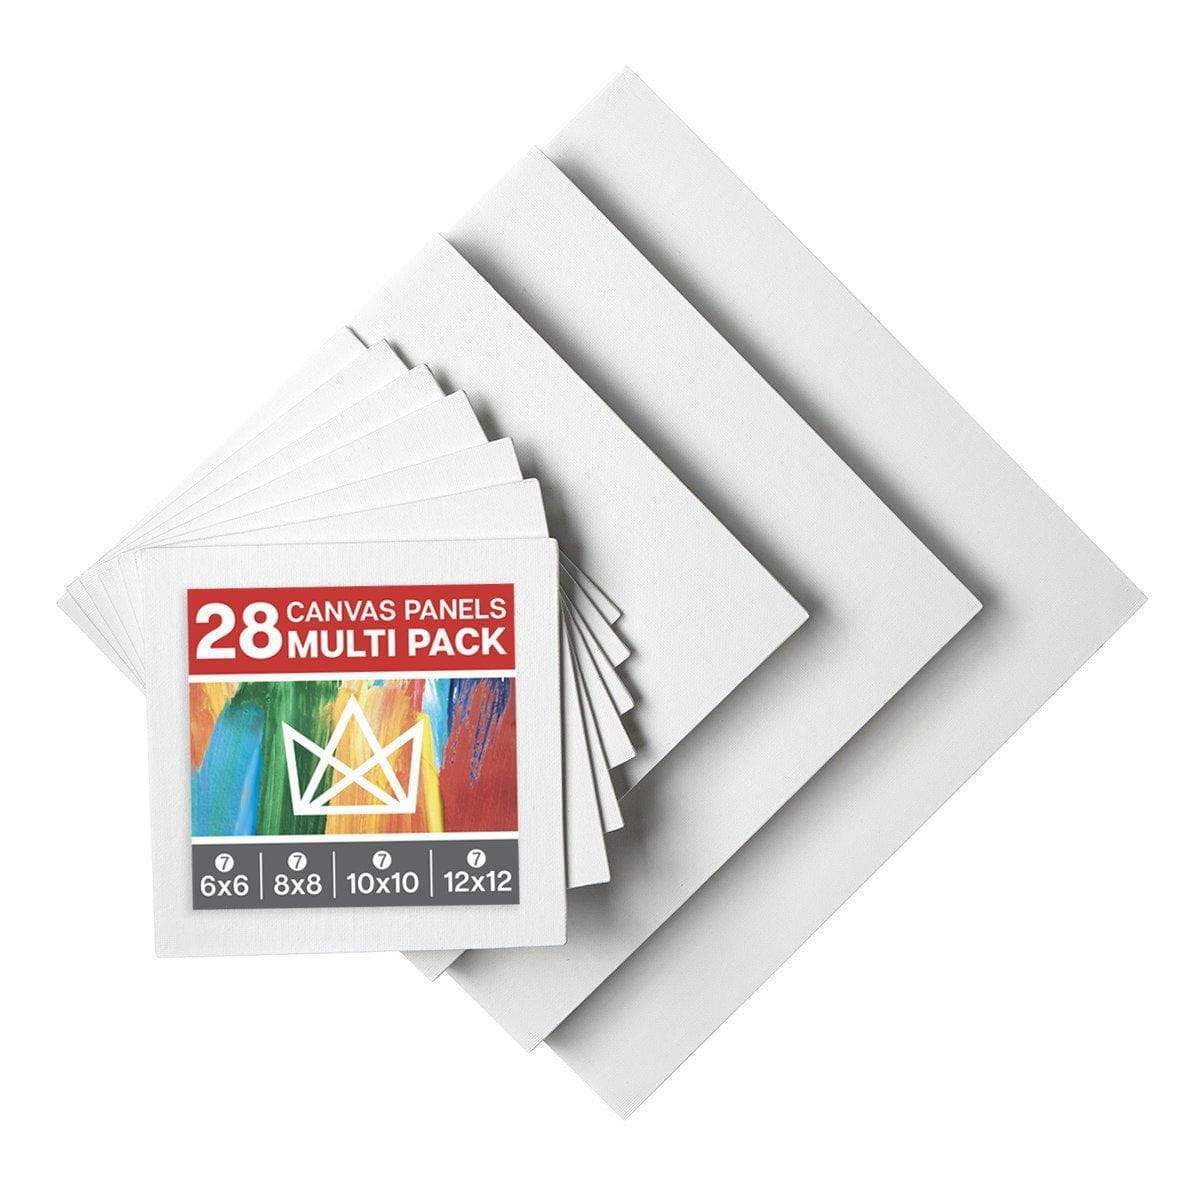 Kingart White Canvas Panels, Classic, Multiple Sizes, Set of 28 (7 ea. of 6x6, 8x8, 10x10, 12x12)